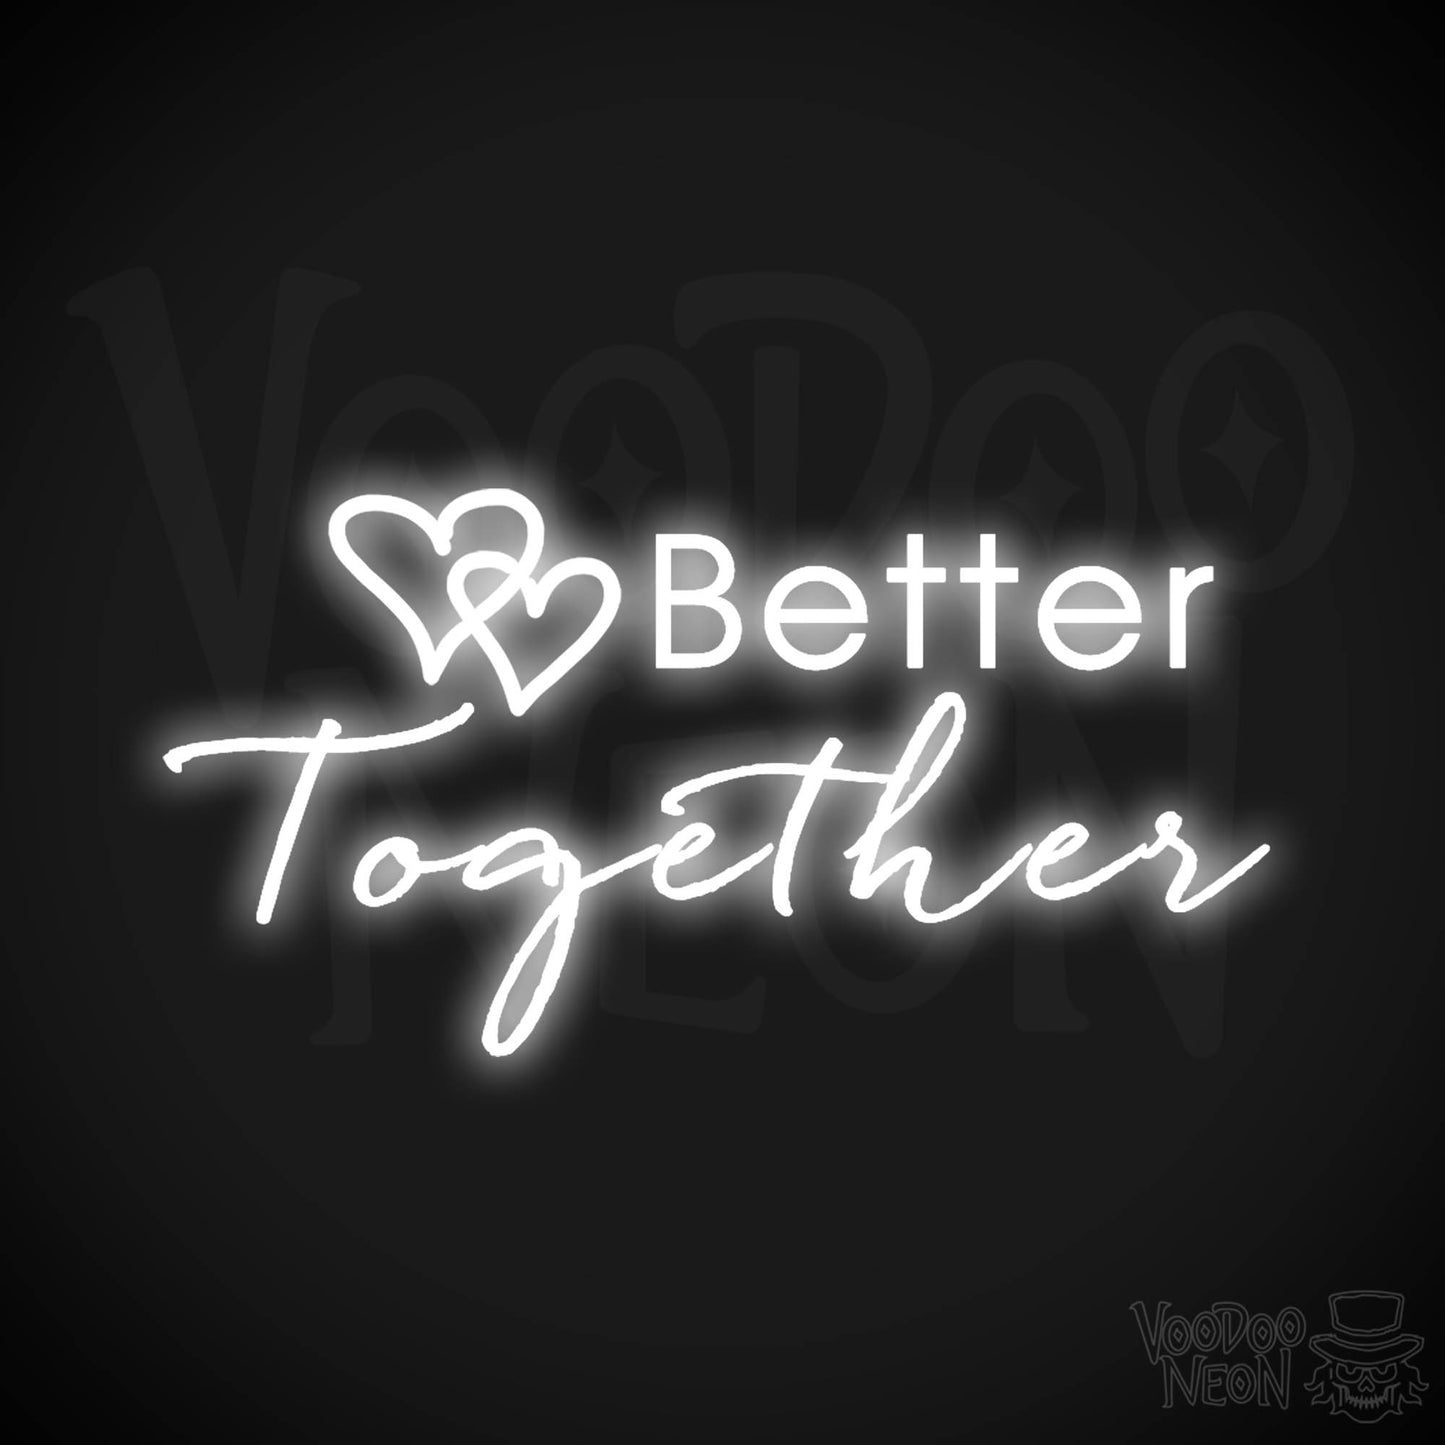 Better Together Neon Sign - Neon Better Together Sign - LED Light Up - Color White